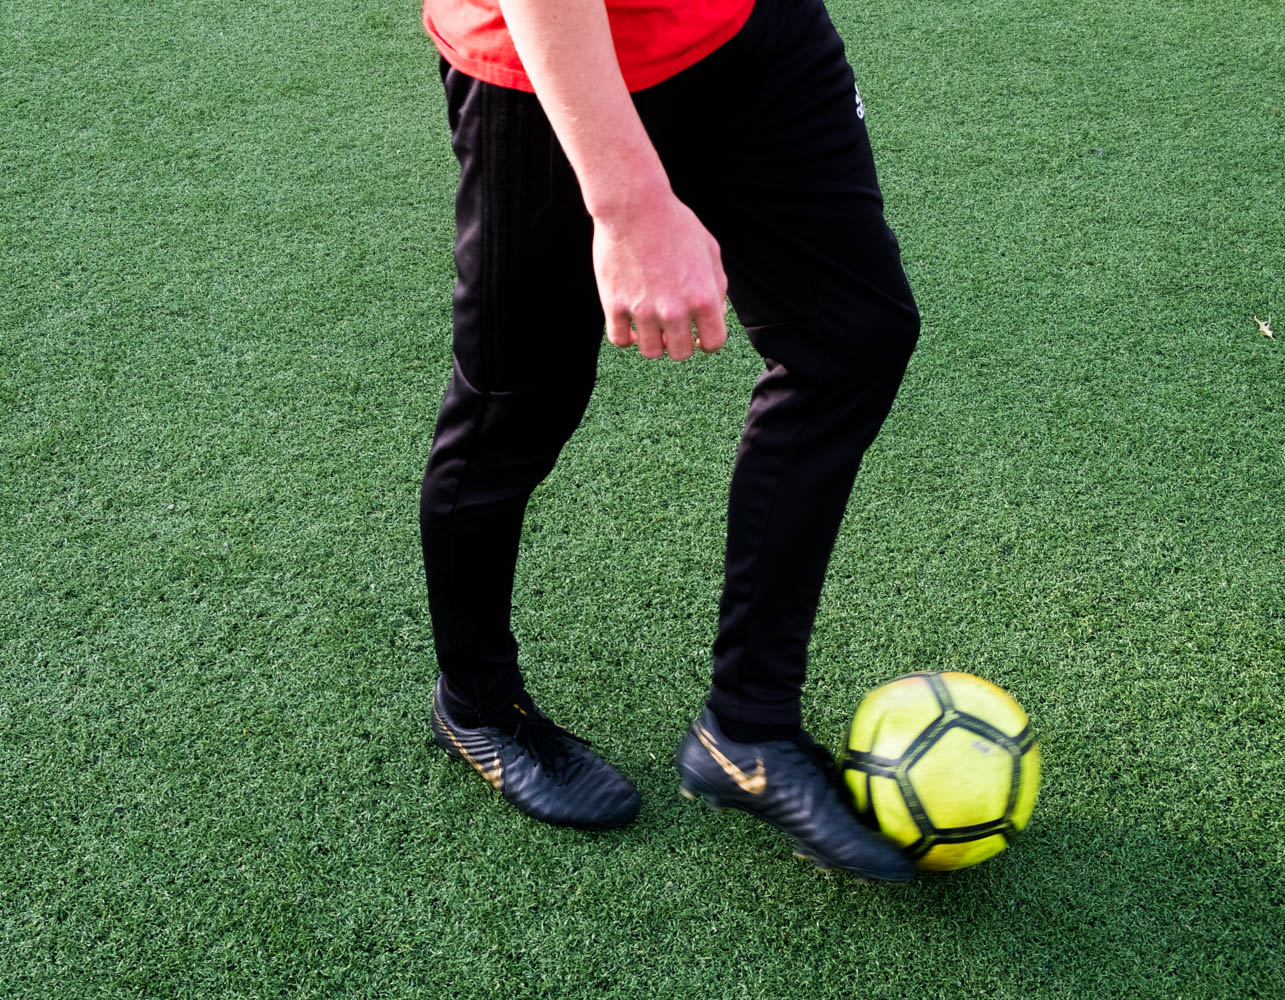 A man kicks a soccer ball on a turf field